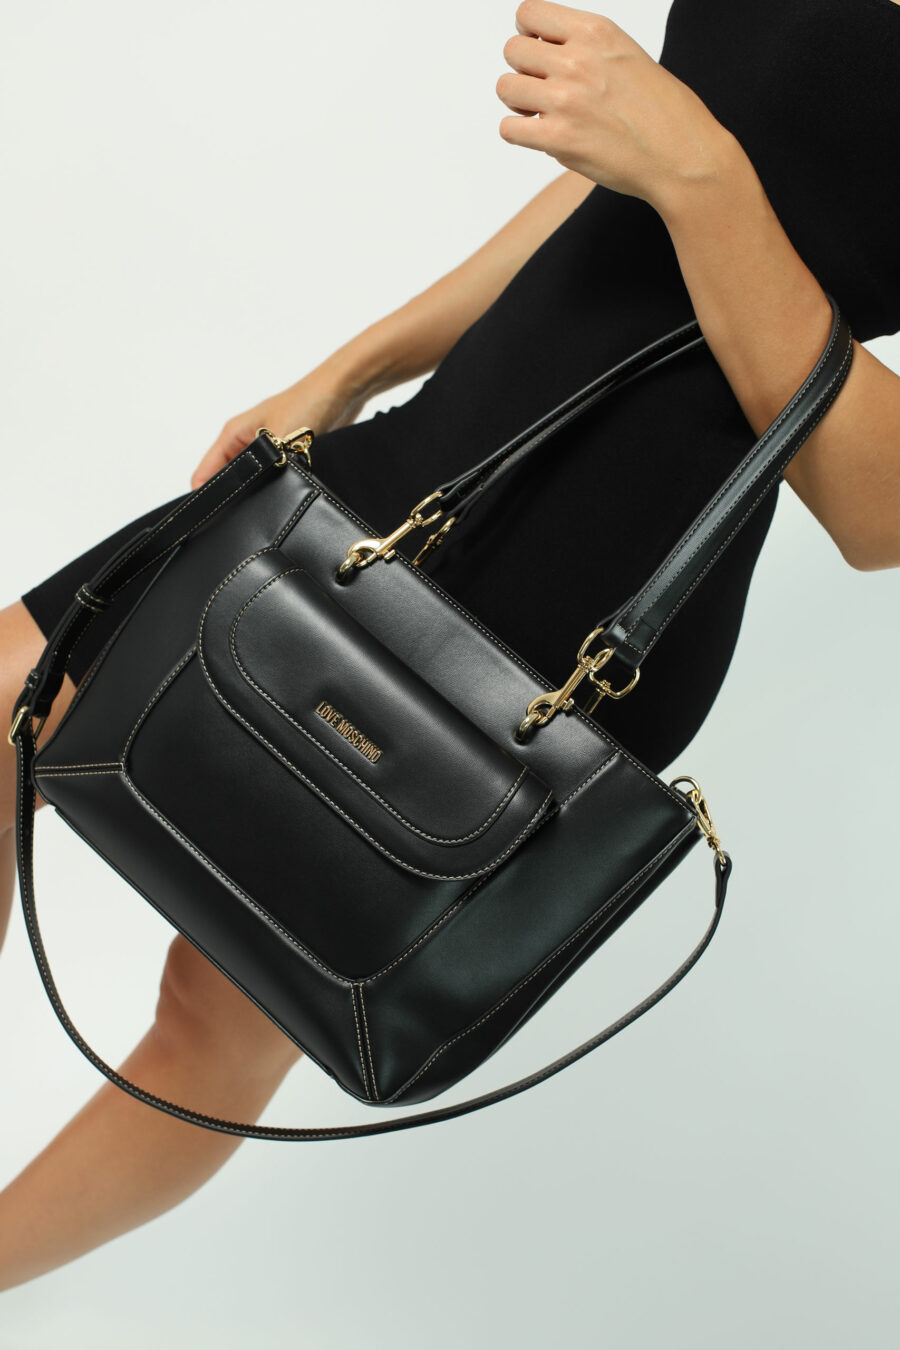 Black shopper bag with front pocket and mini logo - Photos 2489